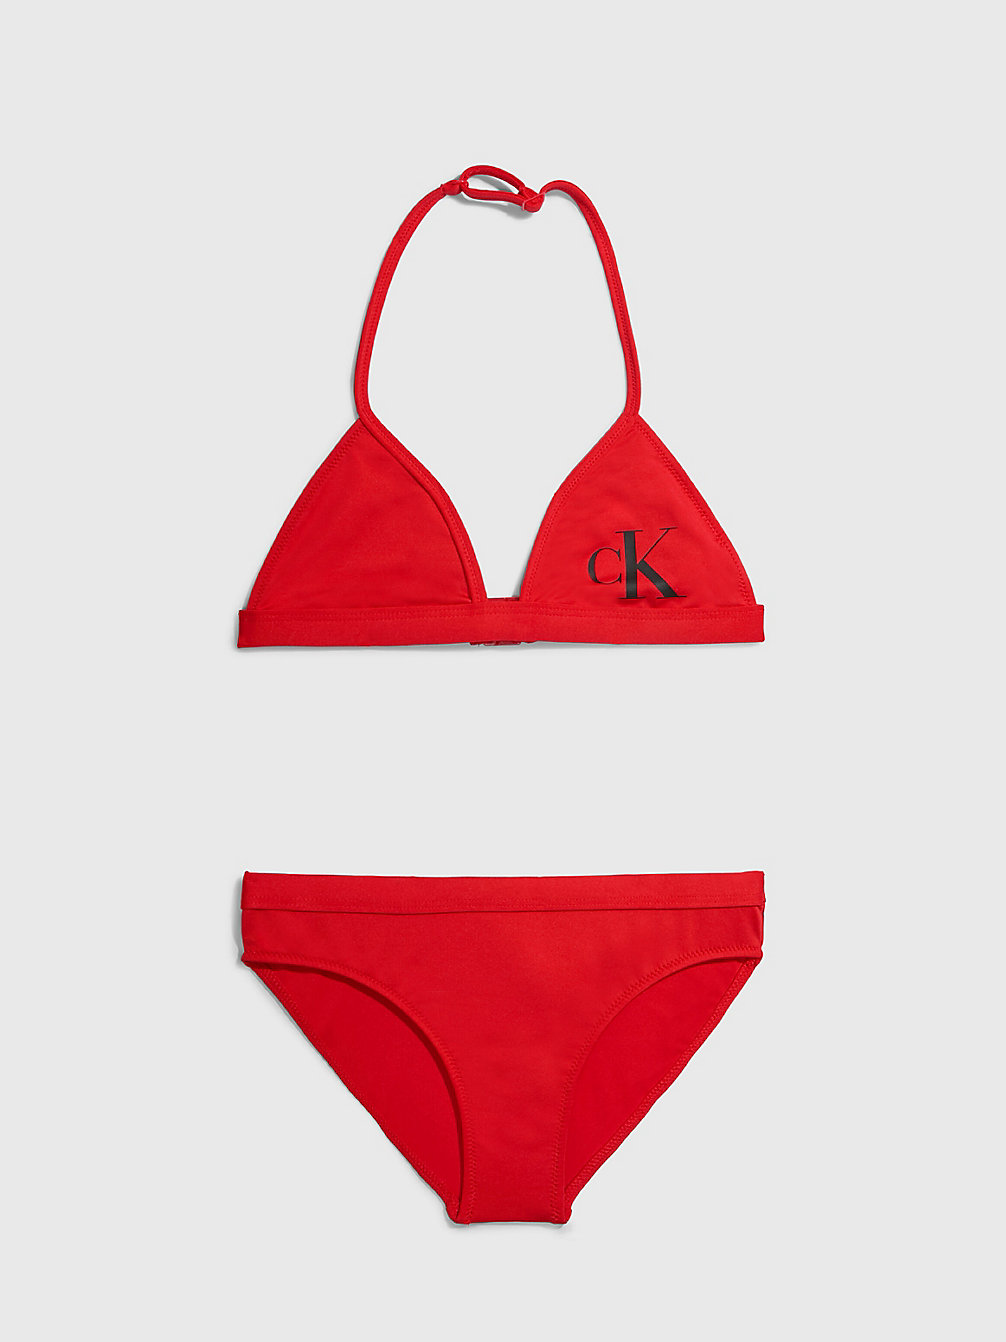 CAJUN RED > Triangelbikini Voor Meisjes - CK Monogram > undefined girls - Calvin Klein